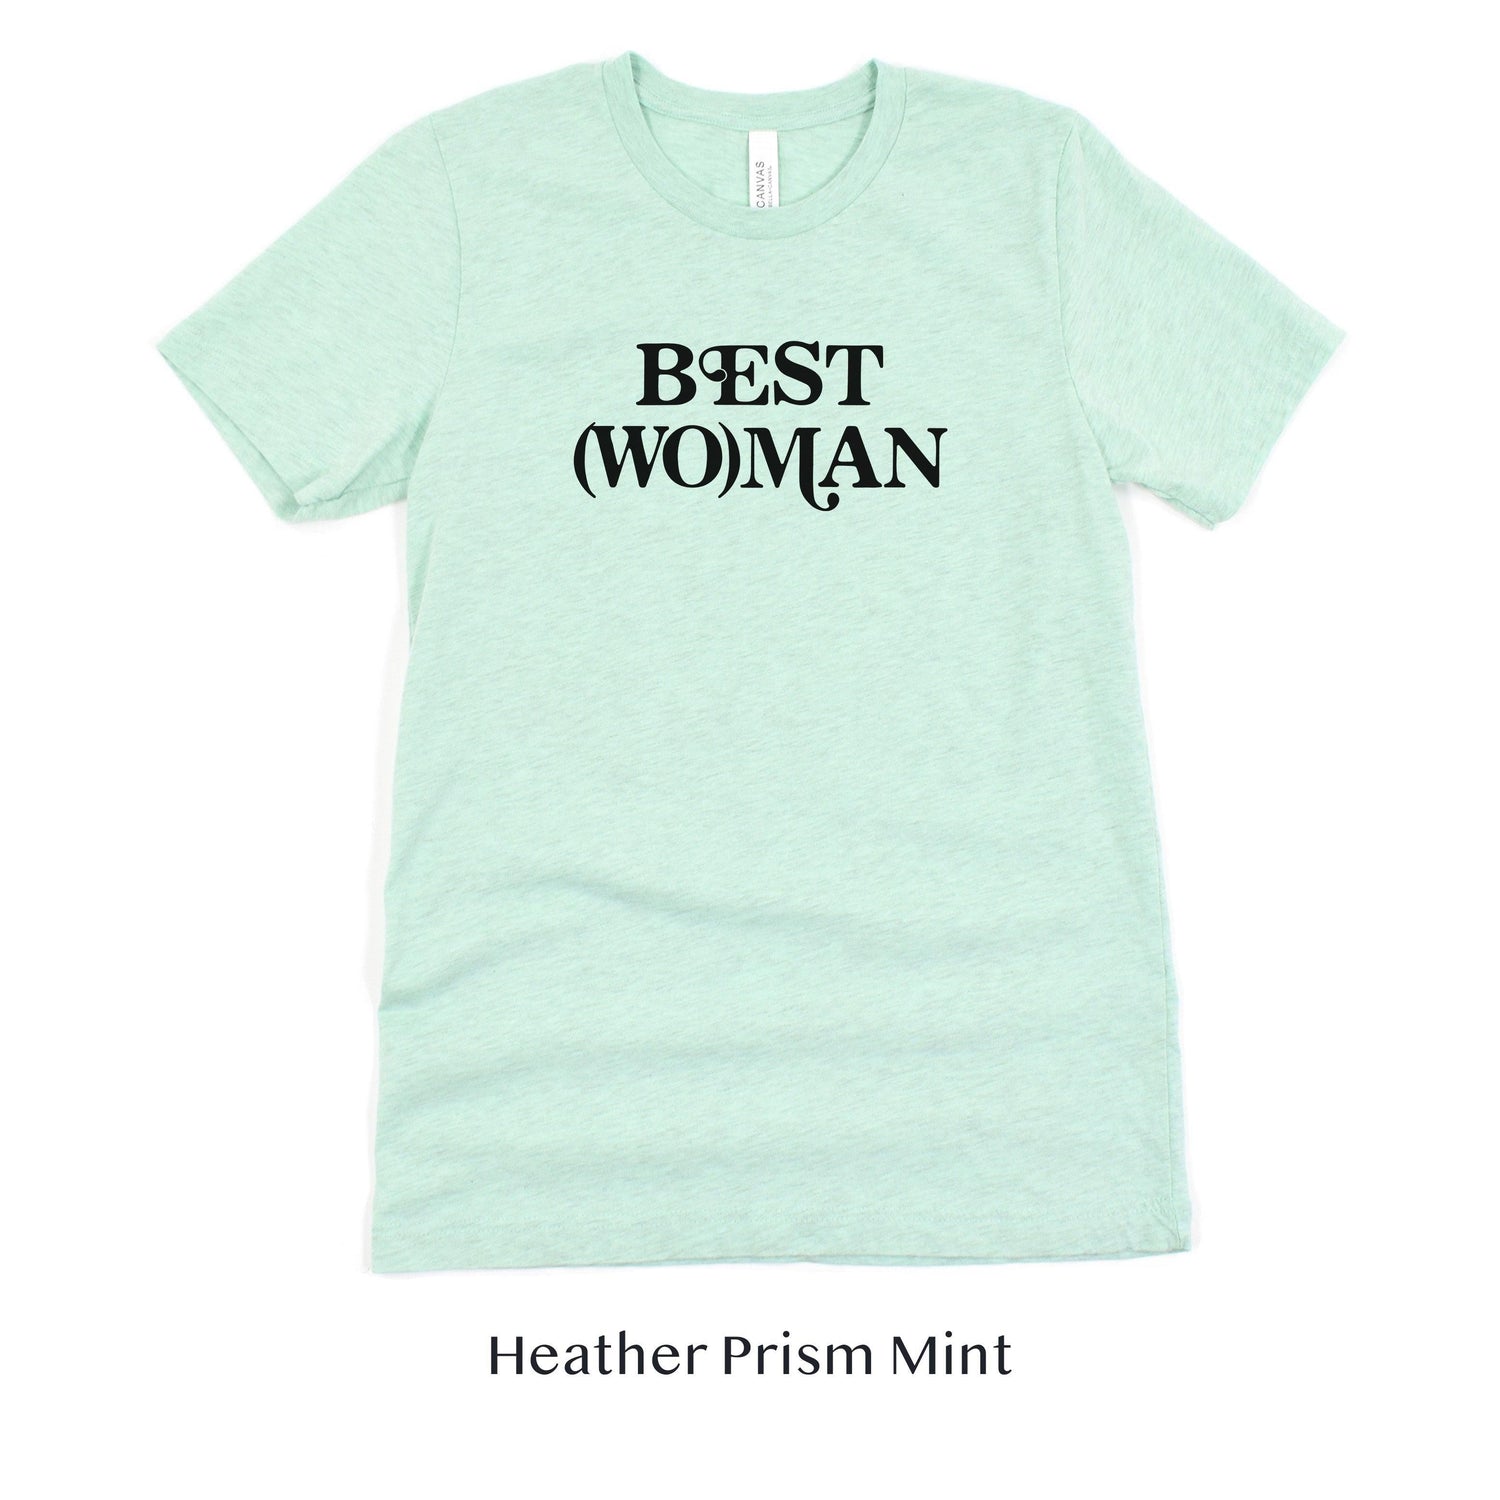 Best (Wo)man Retro Short-sleeve Tee for Best Woman by Oaklynn Lane - Mint shirt